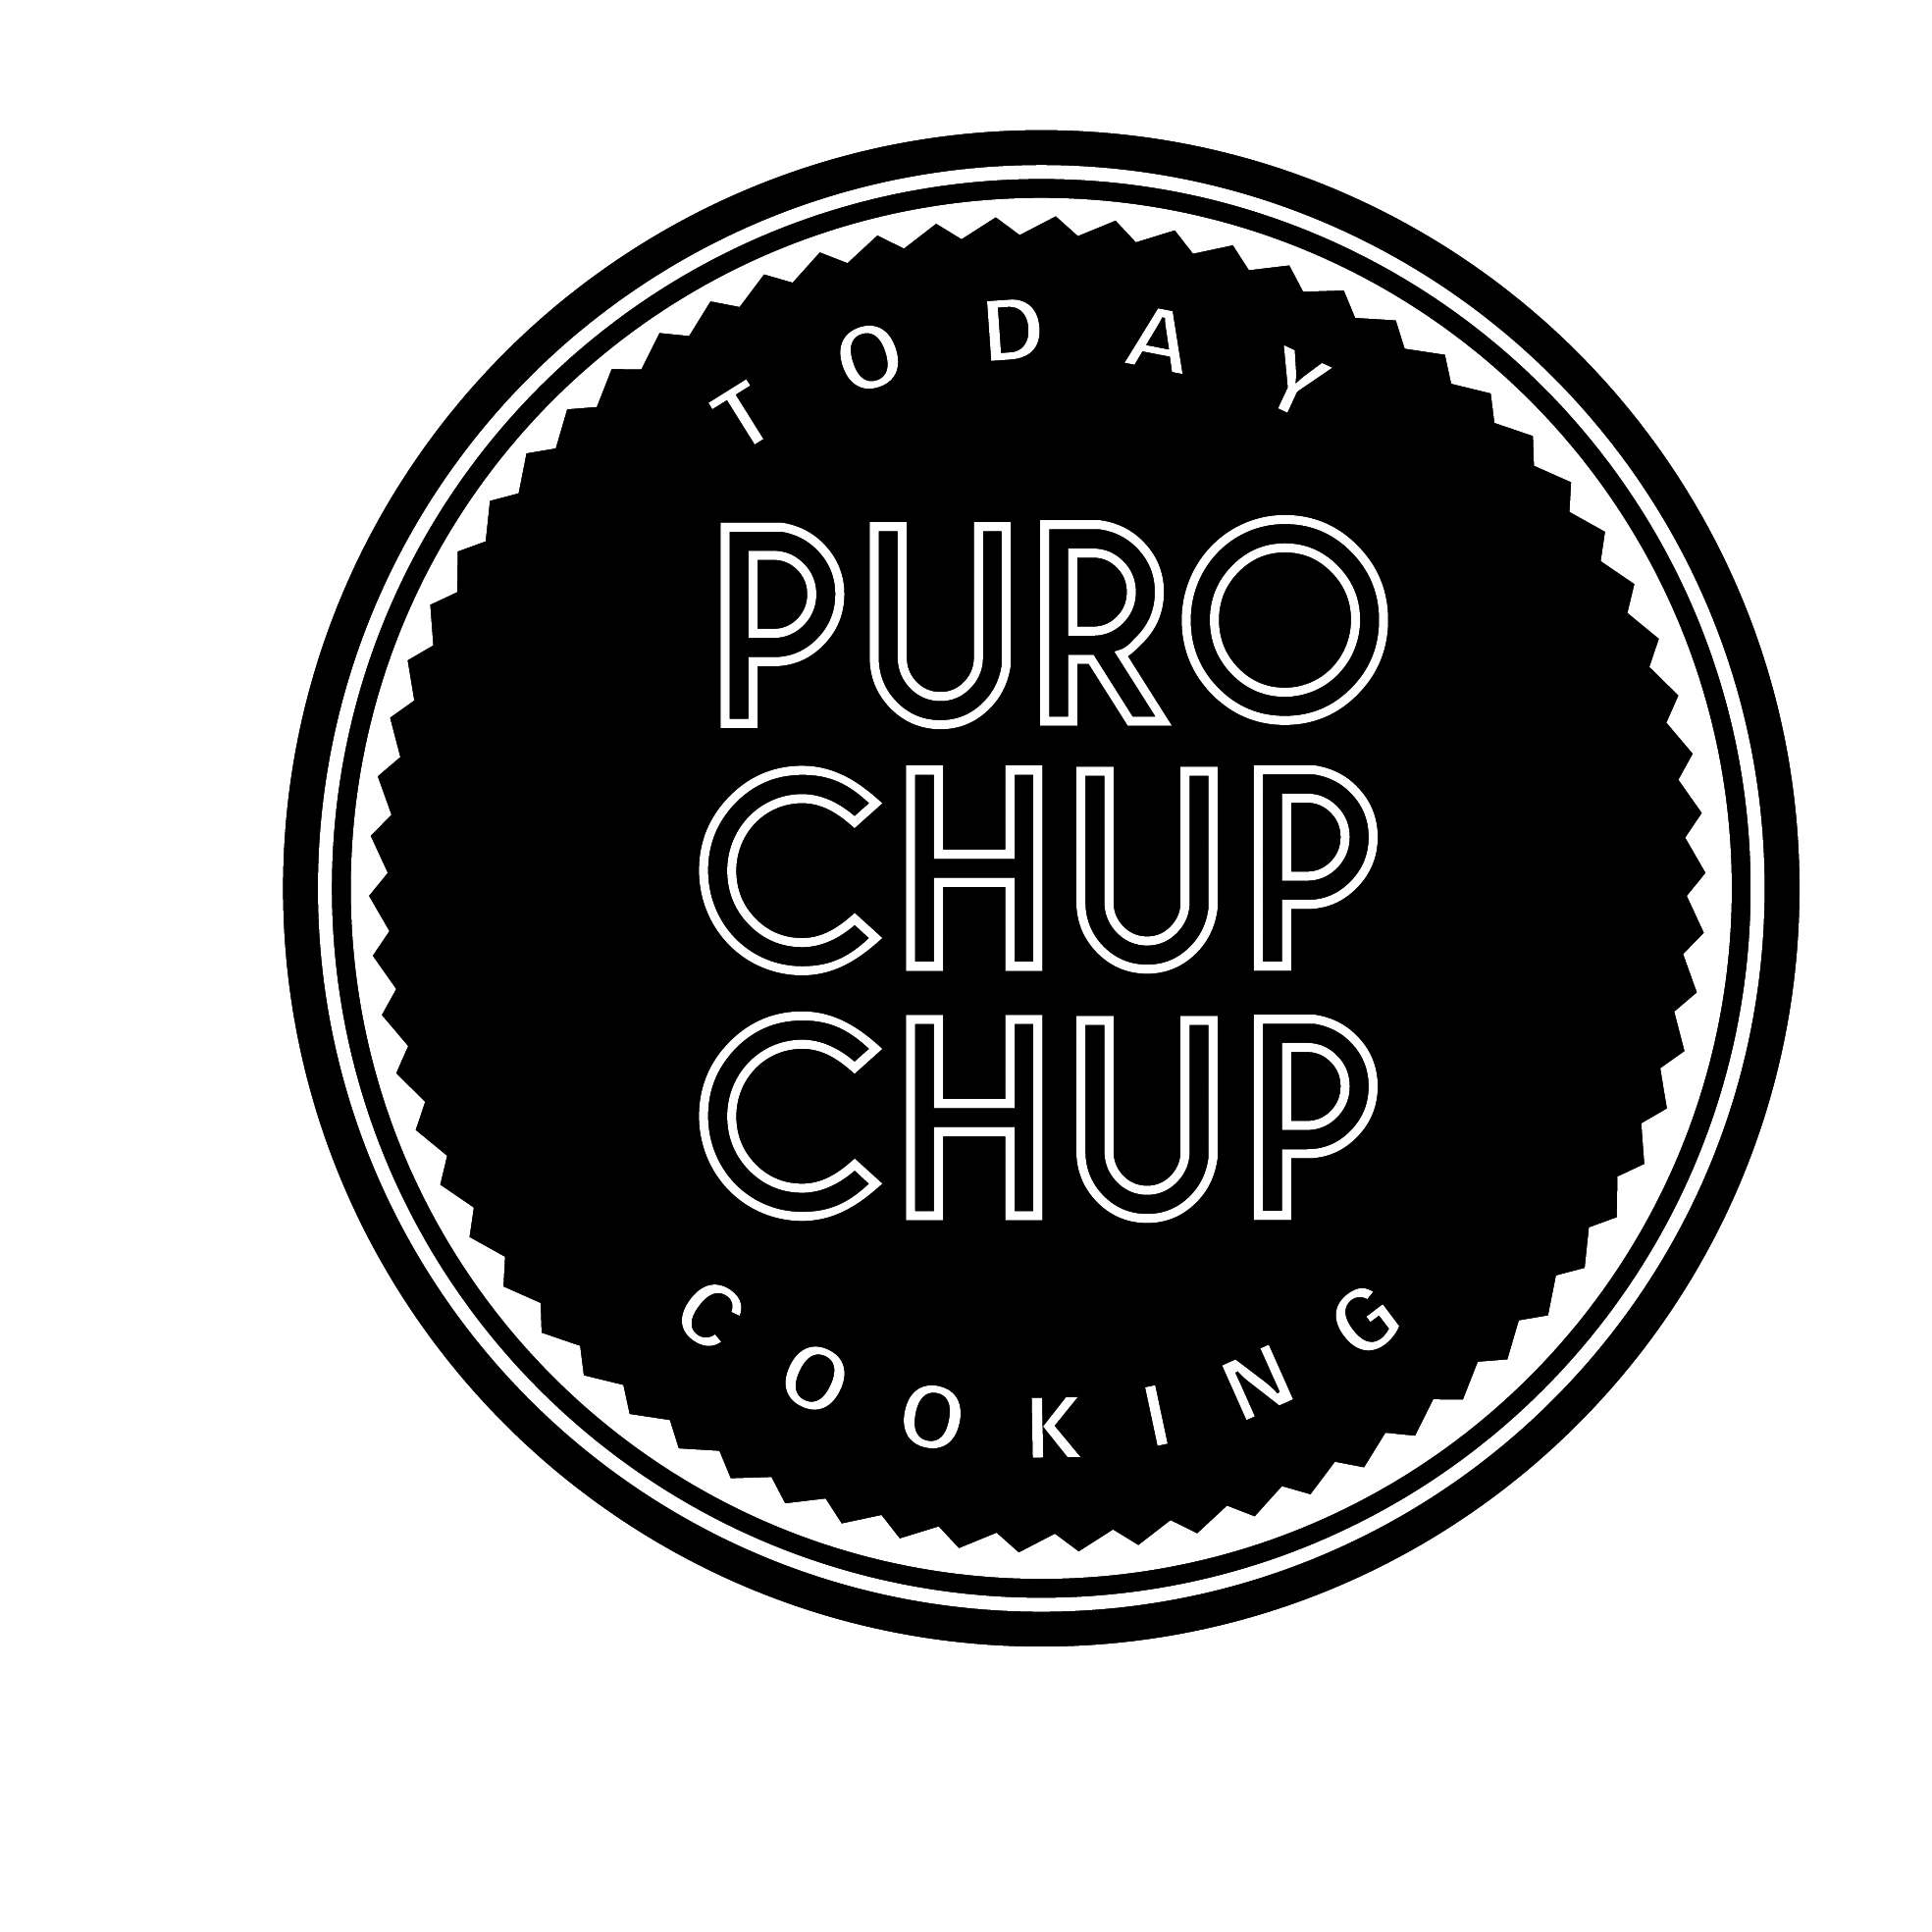 www.purochupchup.com